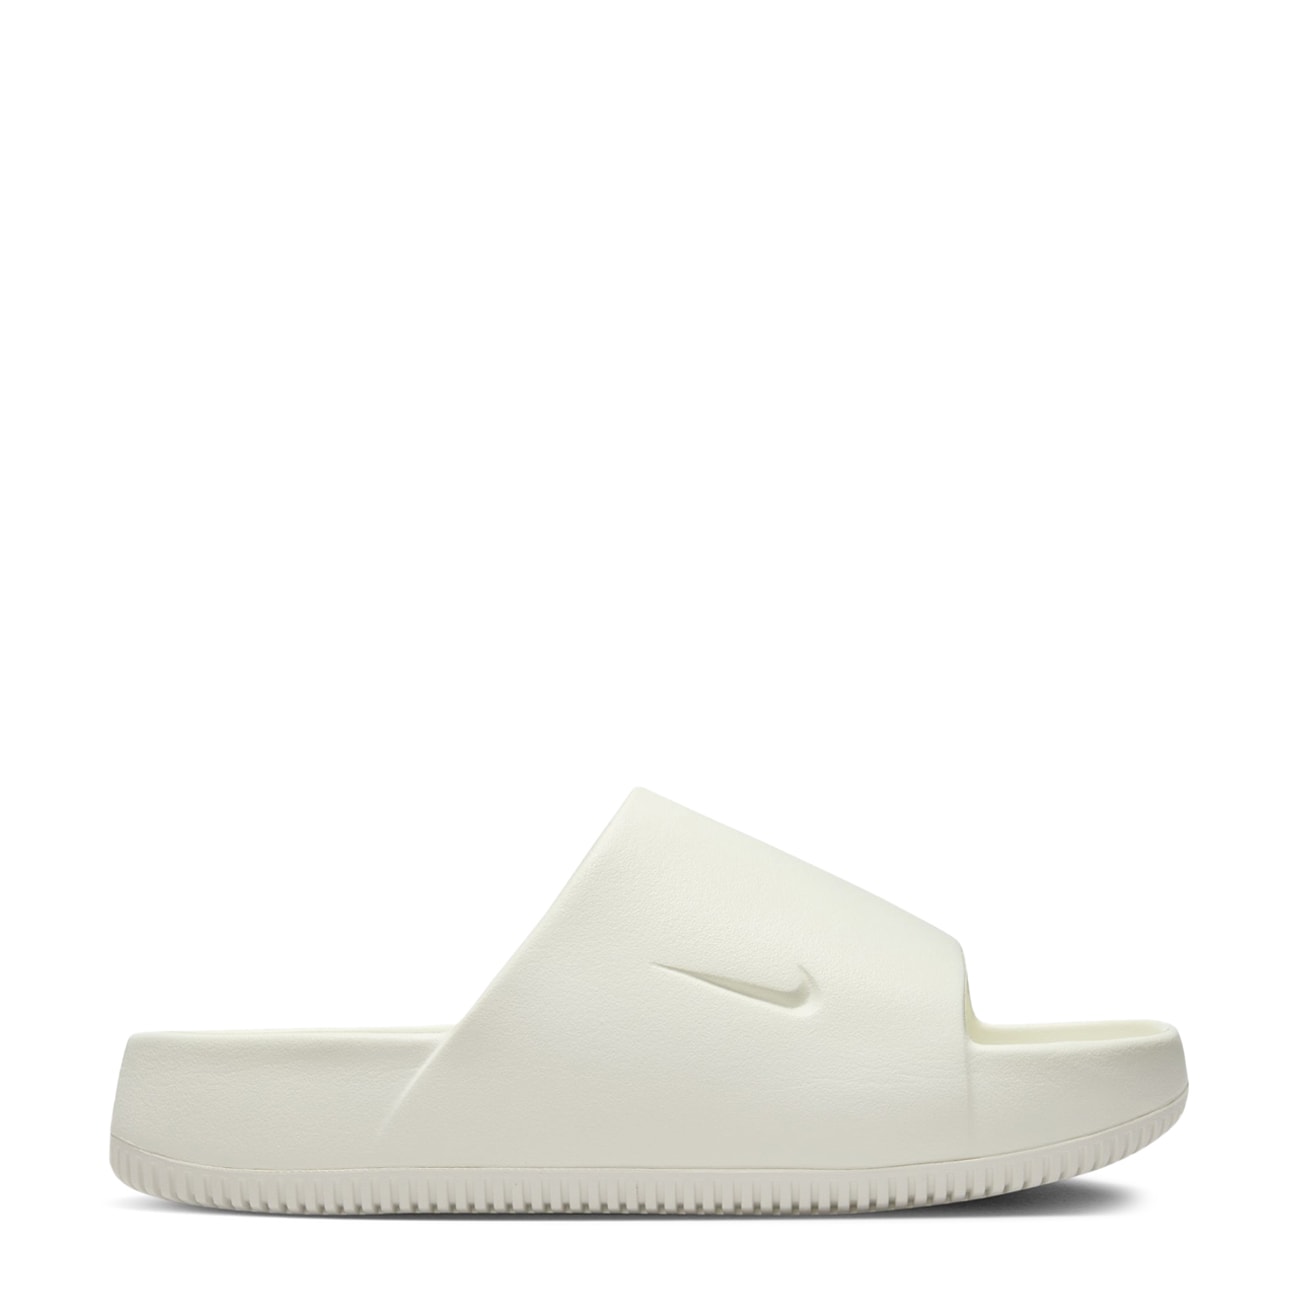 Nike Women's Calm Slide Sandal | The Shoe Company